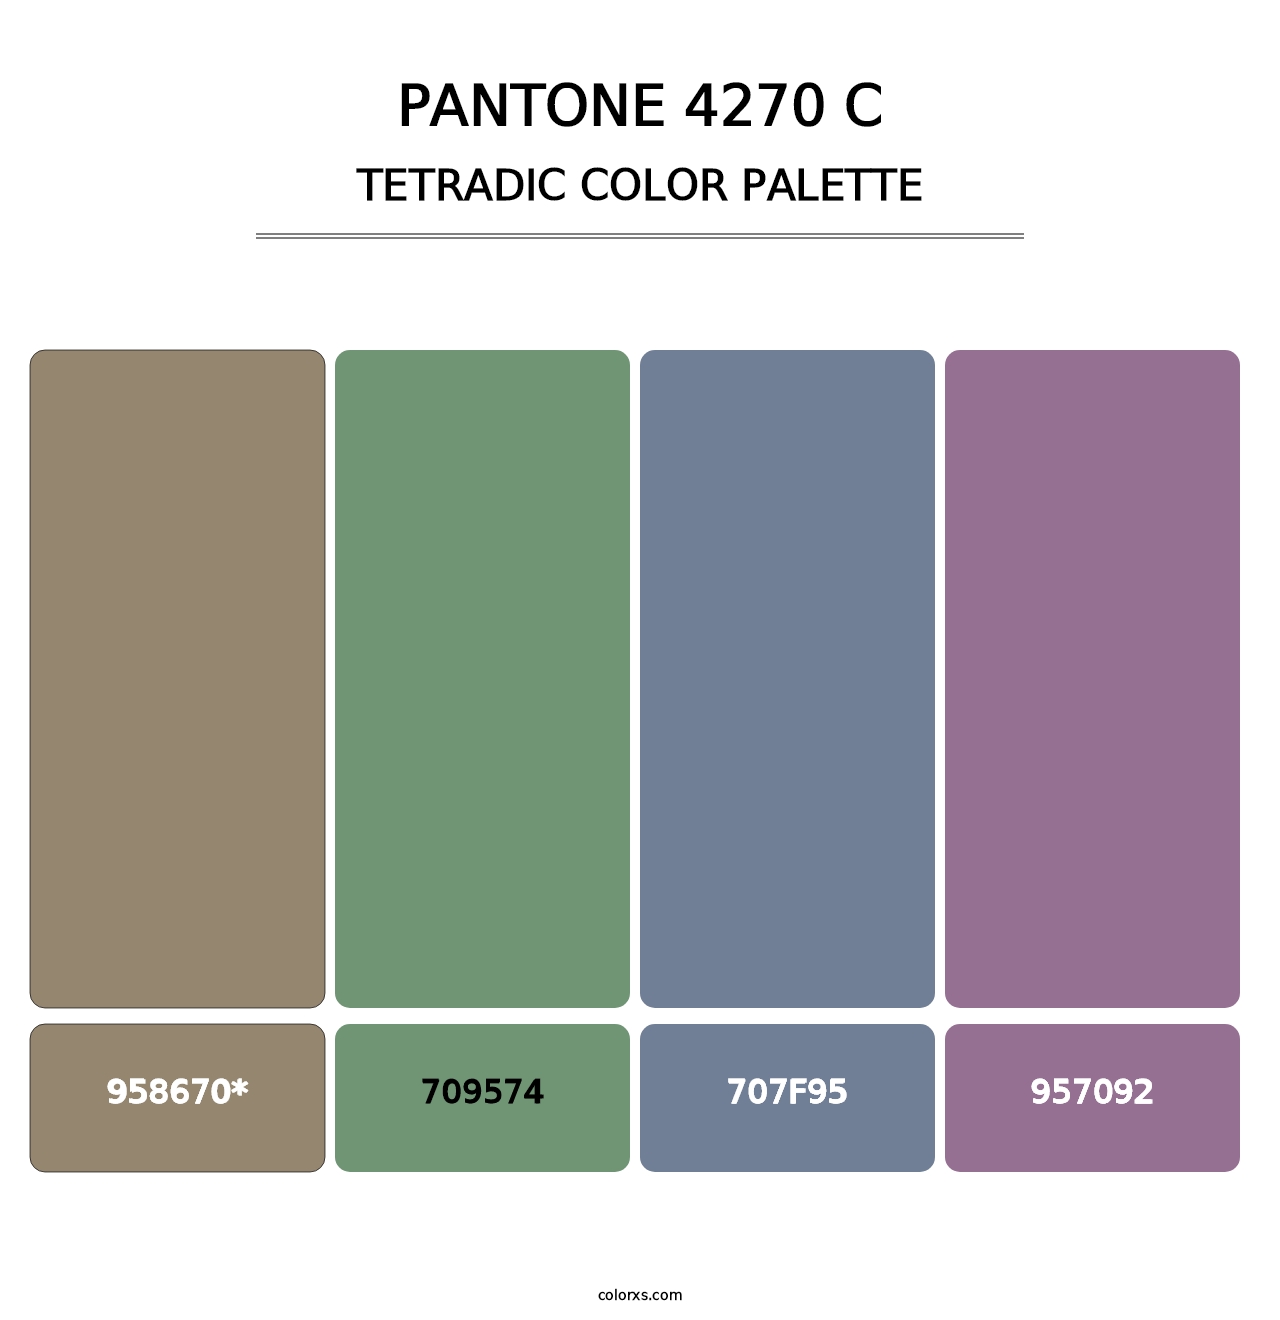 PANTONE 4270 C - Tetradic Color Palette